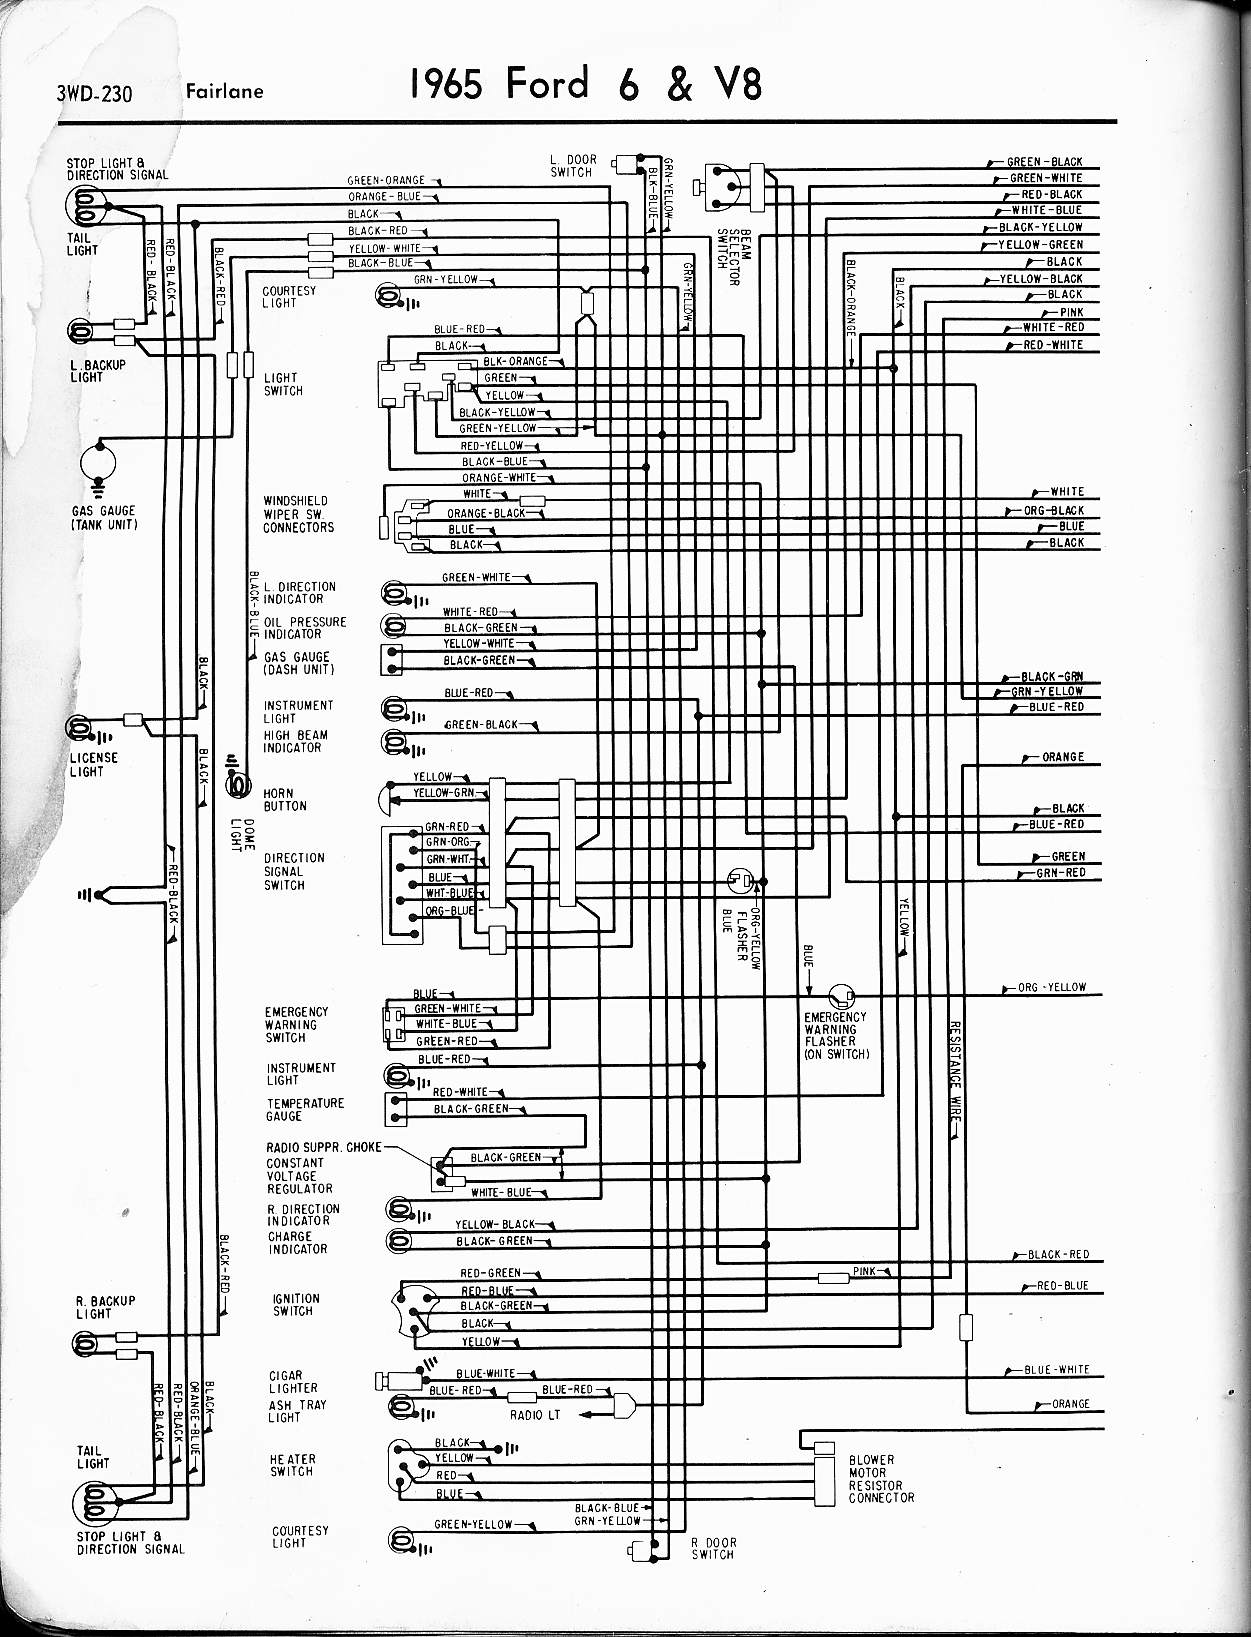 1965 Ford Falcon Wiring Diagram - Wiring Diagram